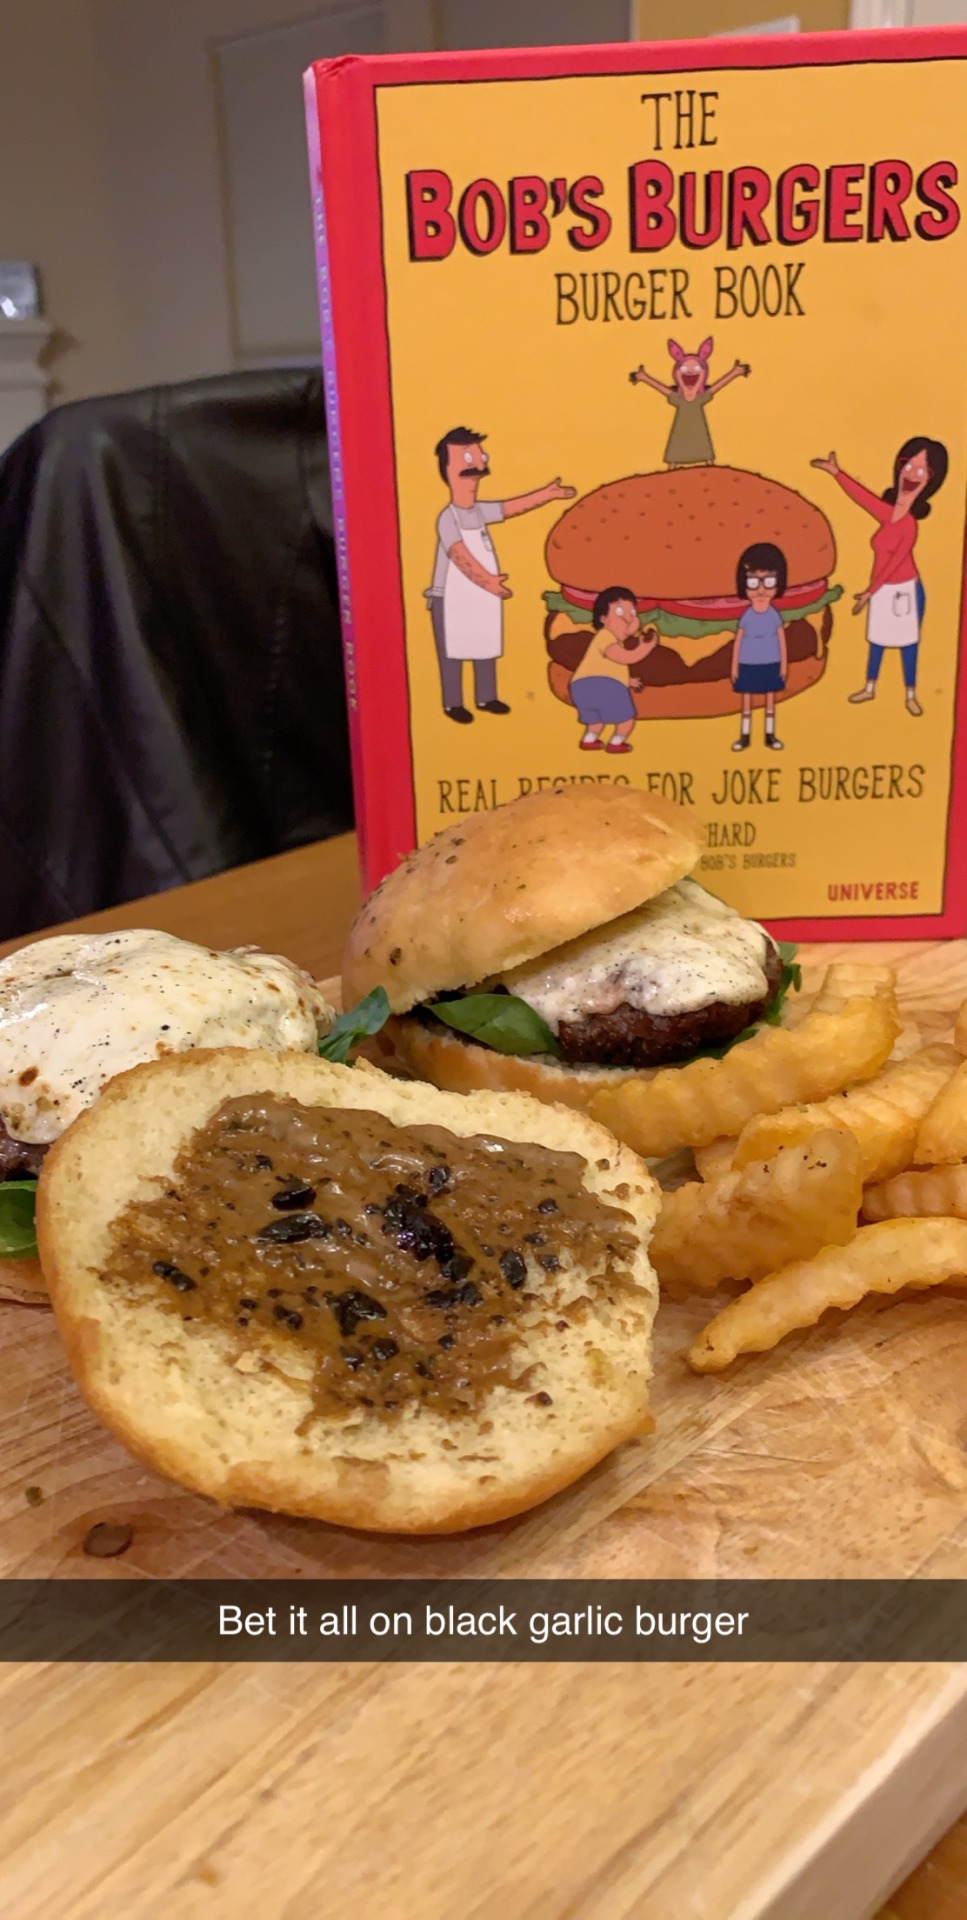 Real Recipes for Joke Burgers The Bob's Burgers Burger Book 